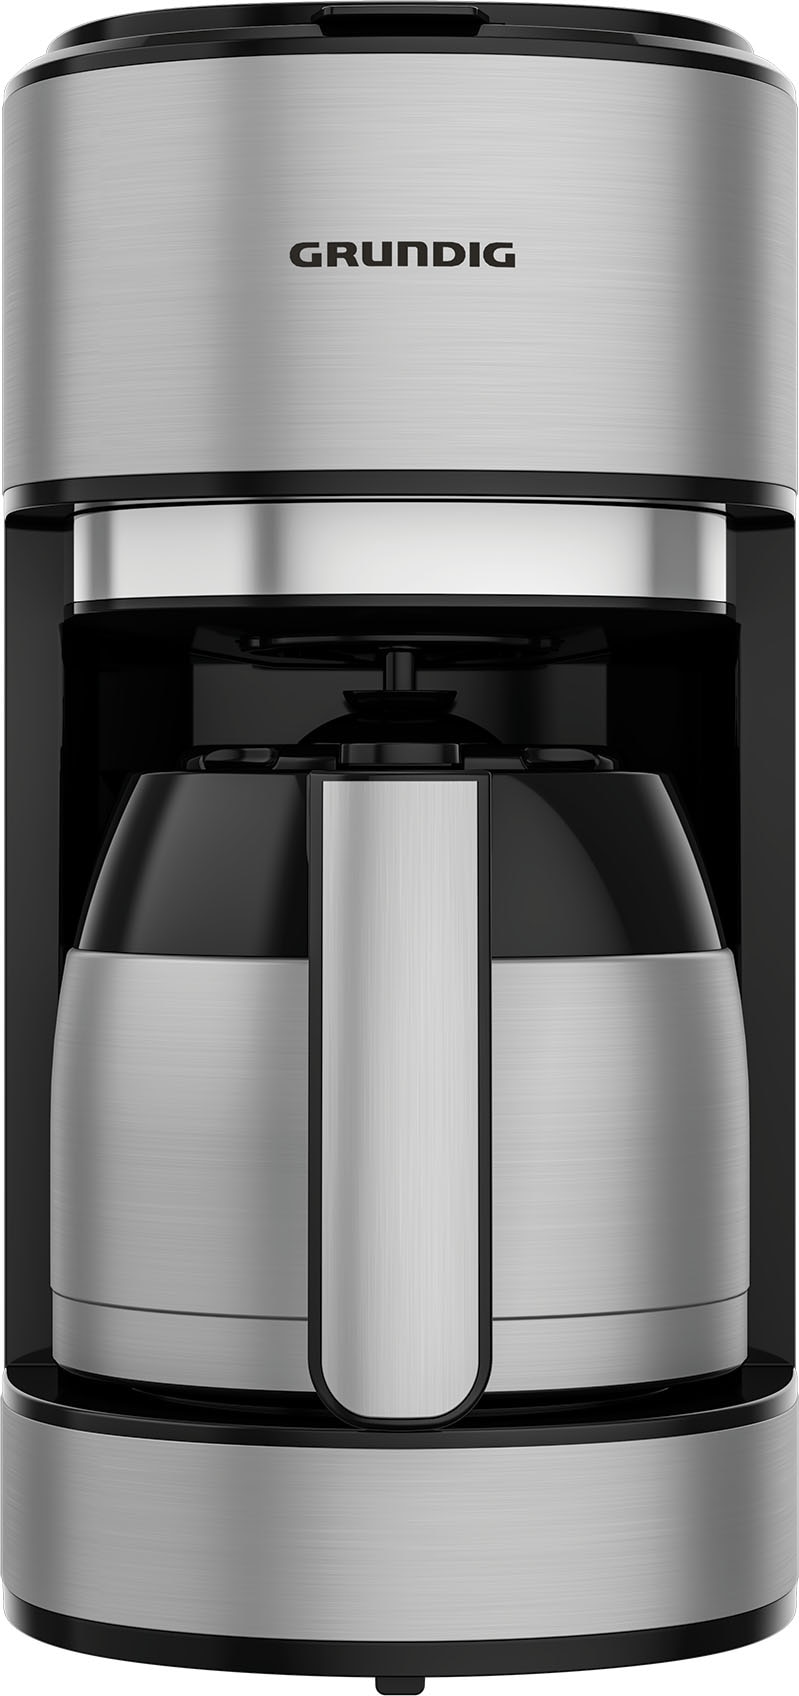 Grundig Filterkaffeemaschine »KM 5620 T«, 1 l Kaffeekanne